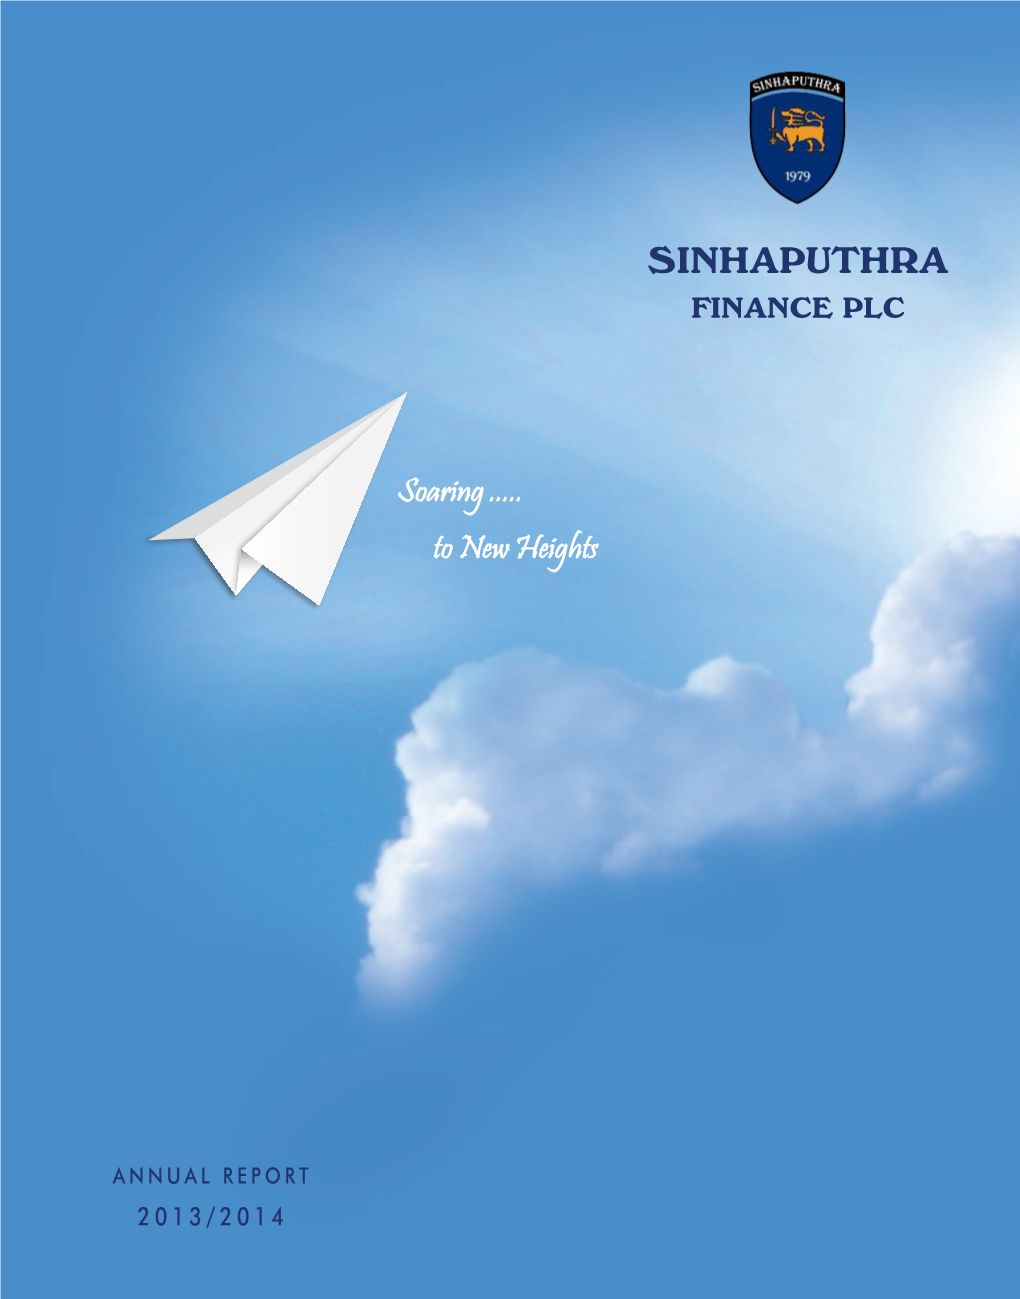 Sinhaputhra Finance Plc